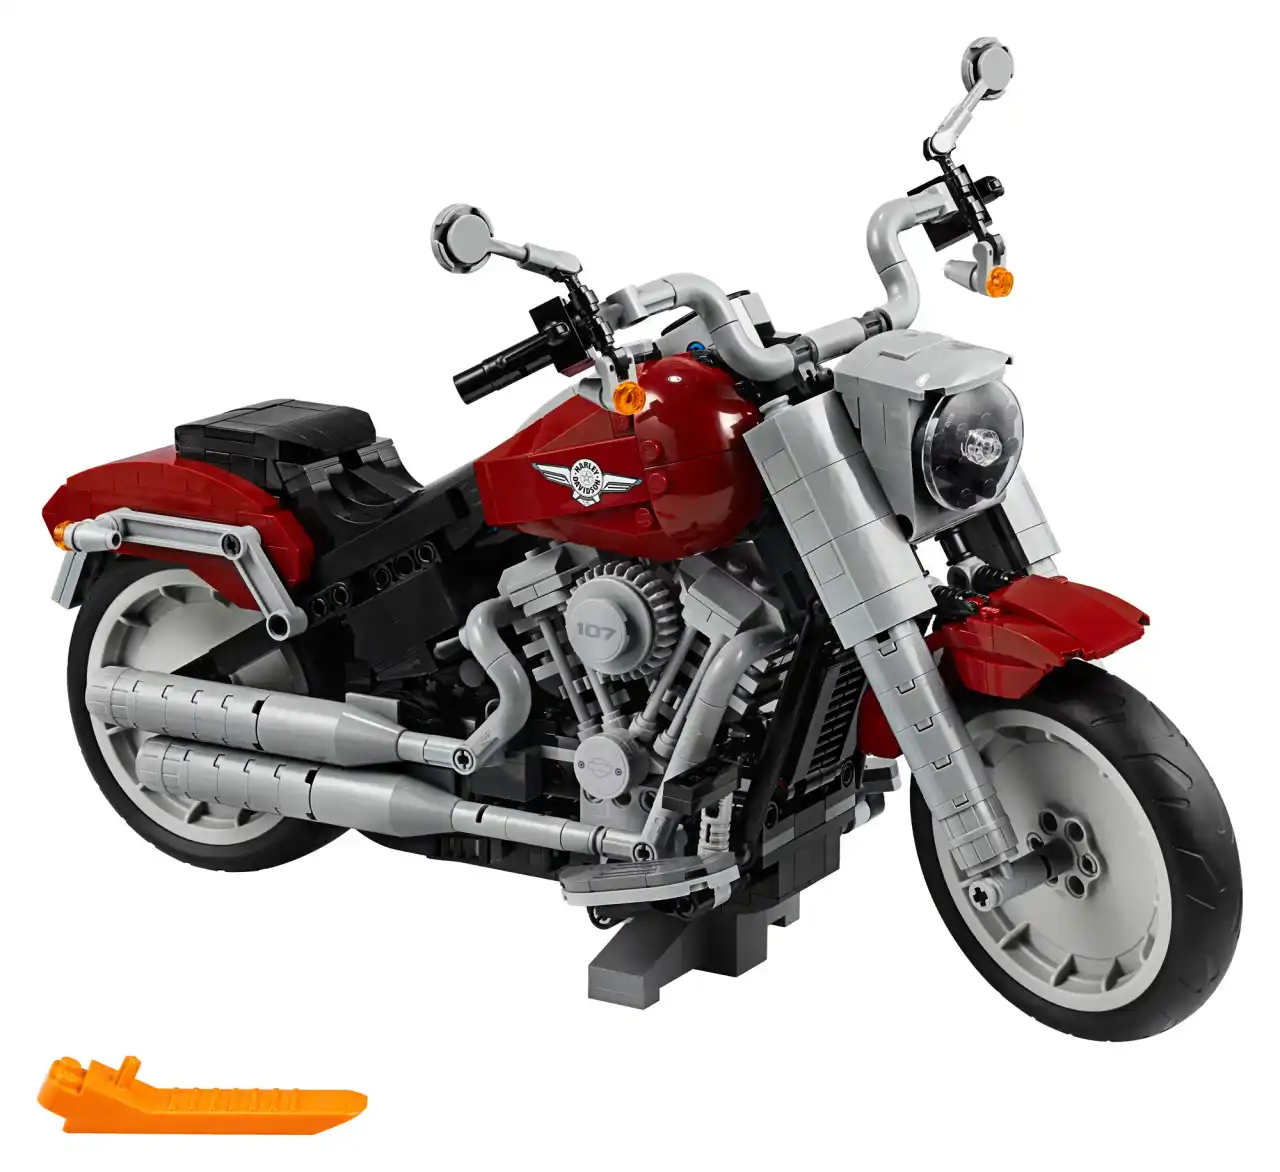 10269 - Harley-Davidson Fat Boy